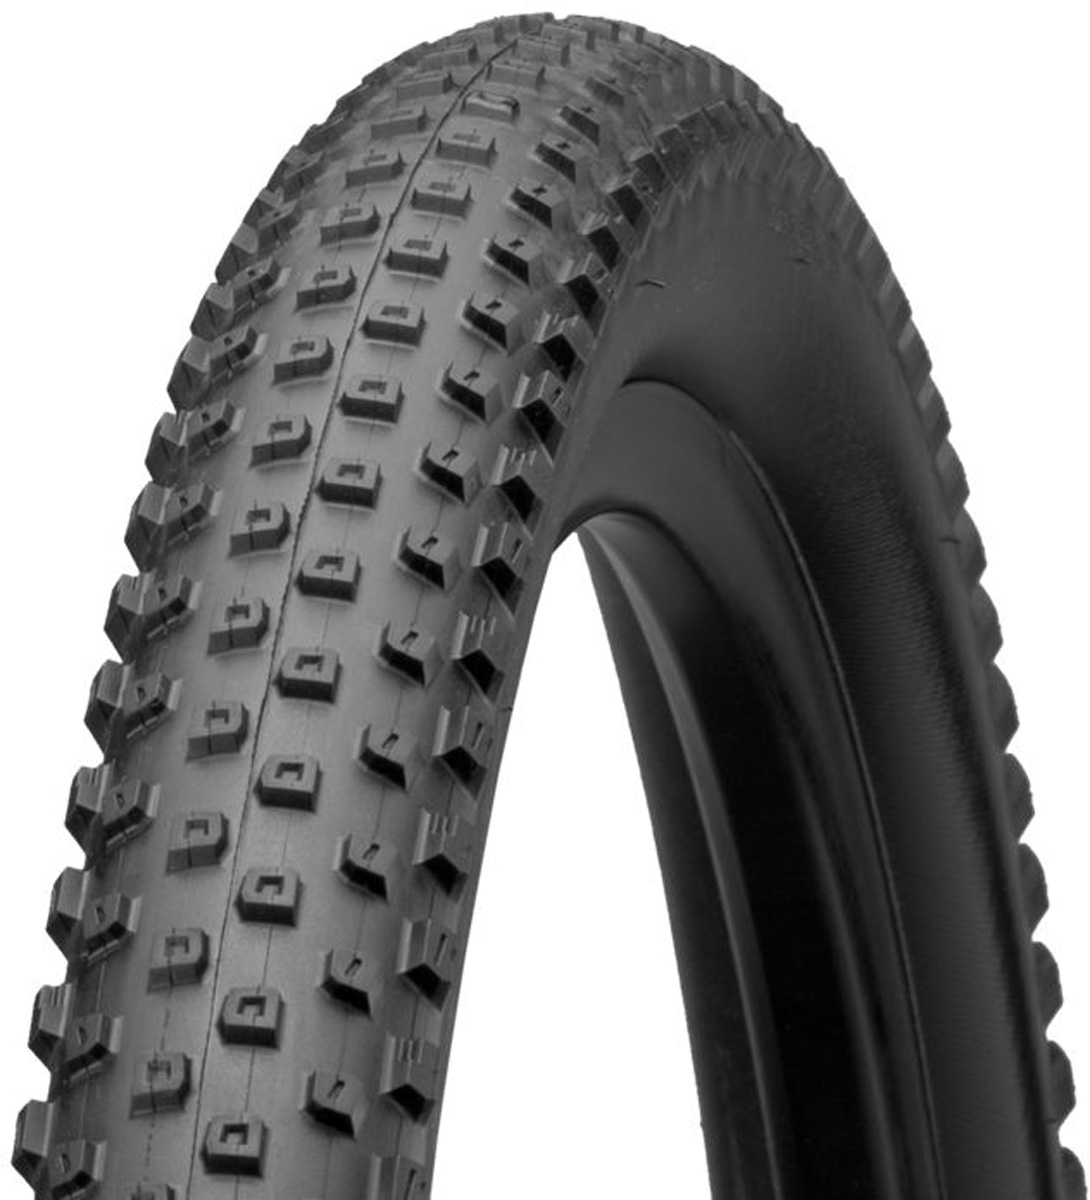 27.5 inch mountain bike tyres